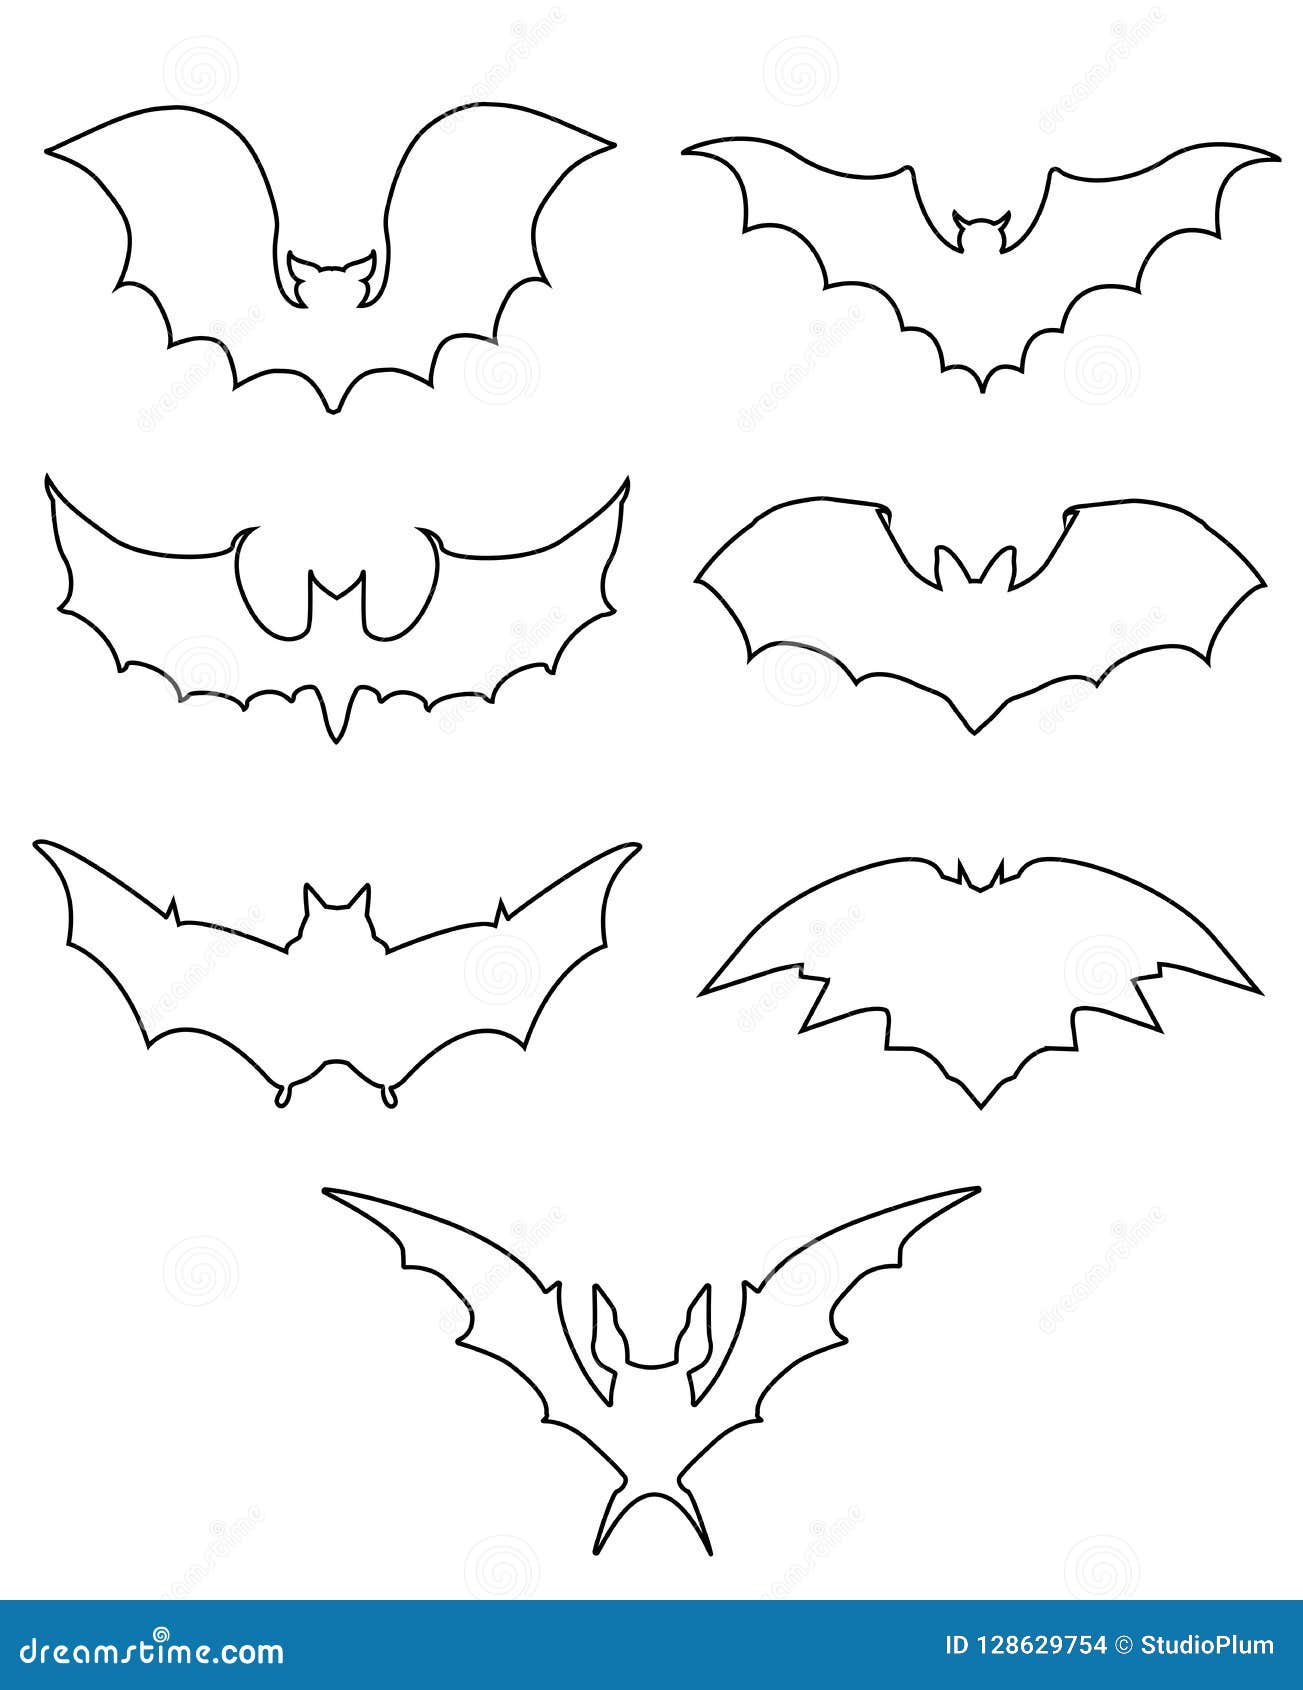 bat drawing template